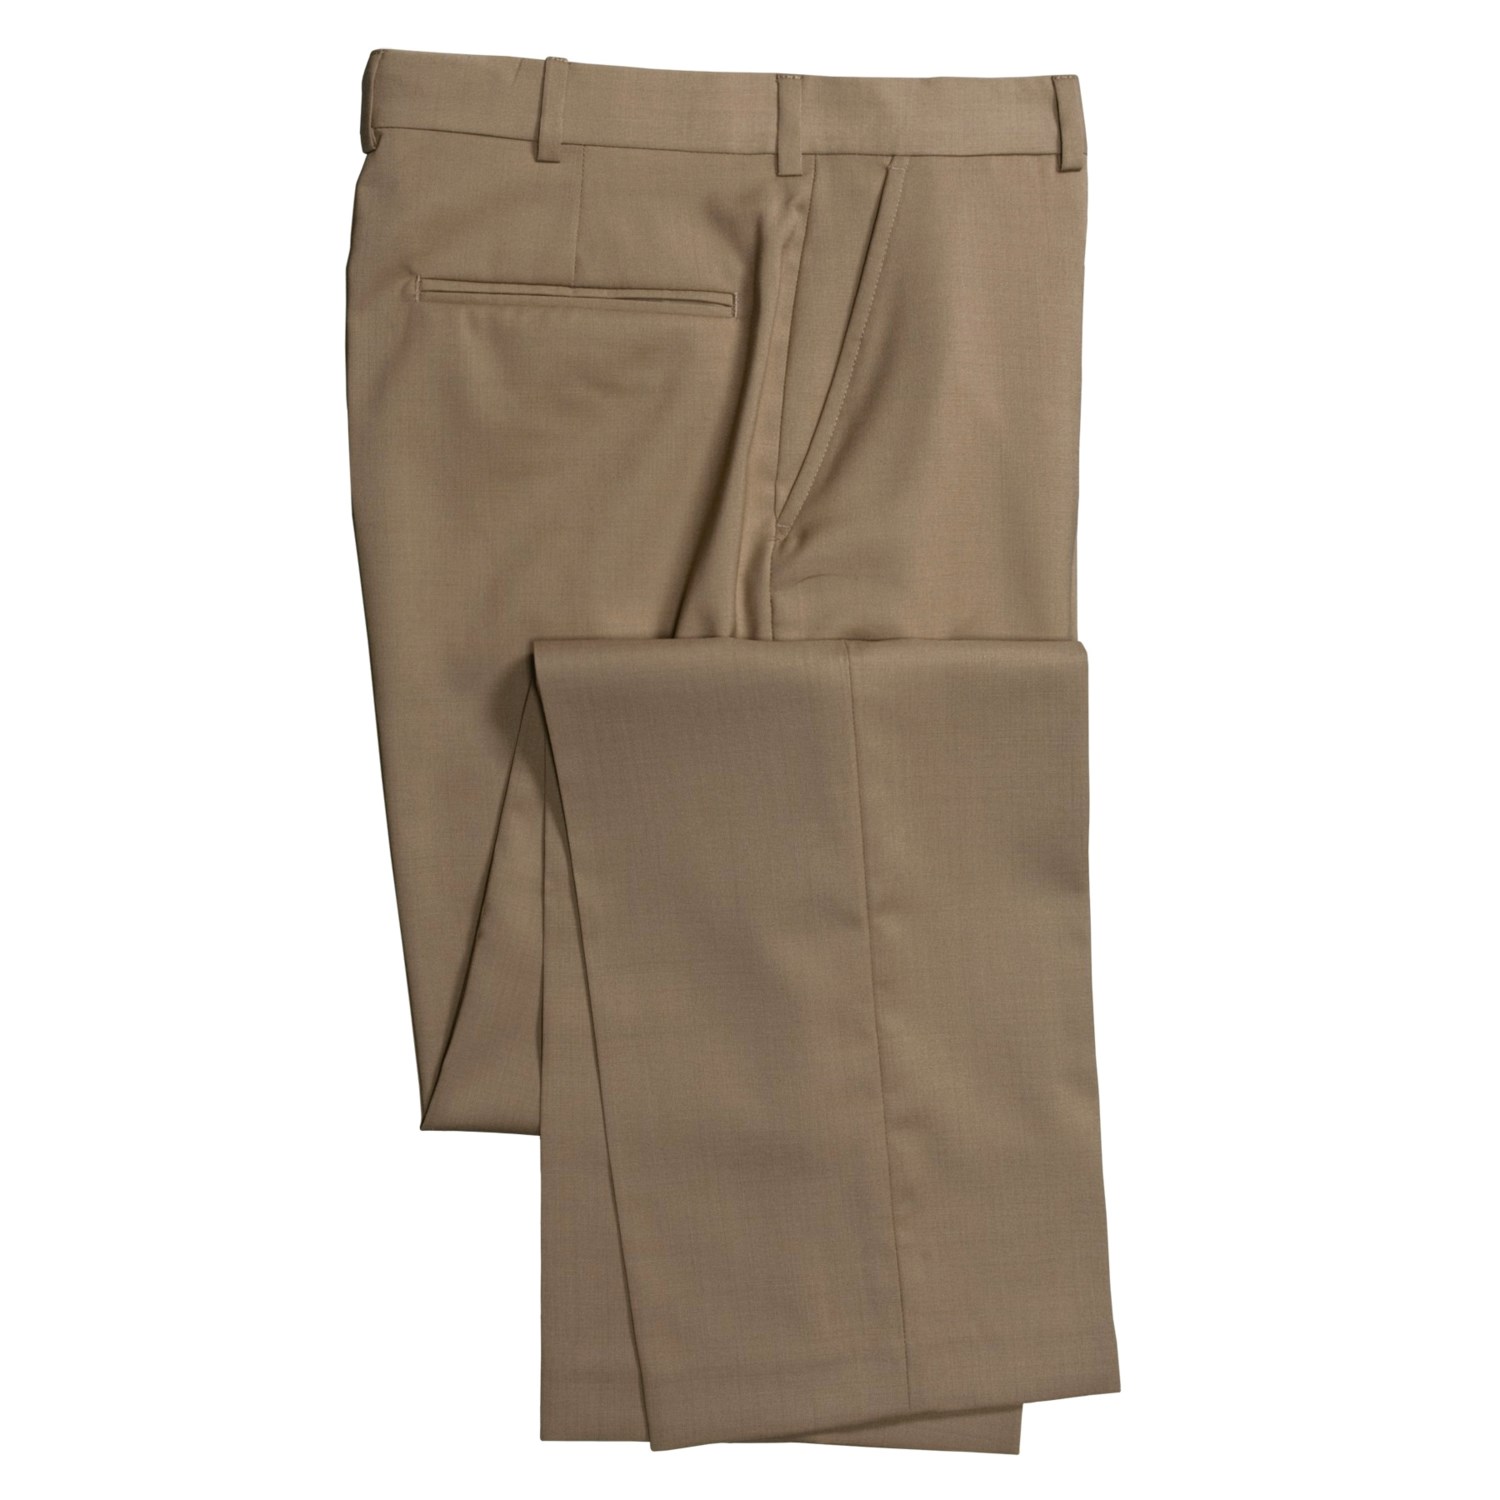 Washable Flat-Front Dress Pants (For Men) 2367J - Save 62%